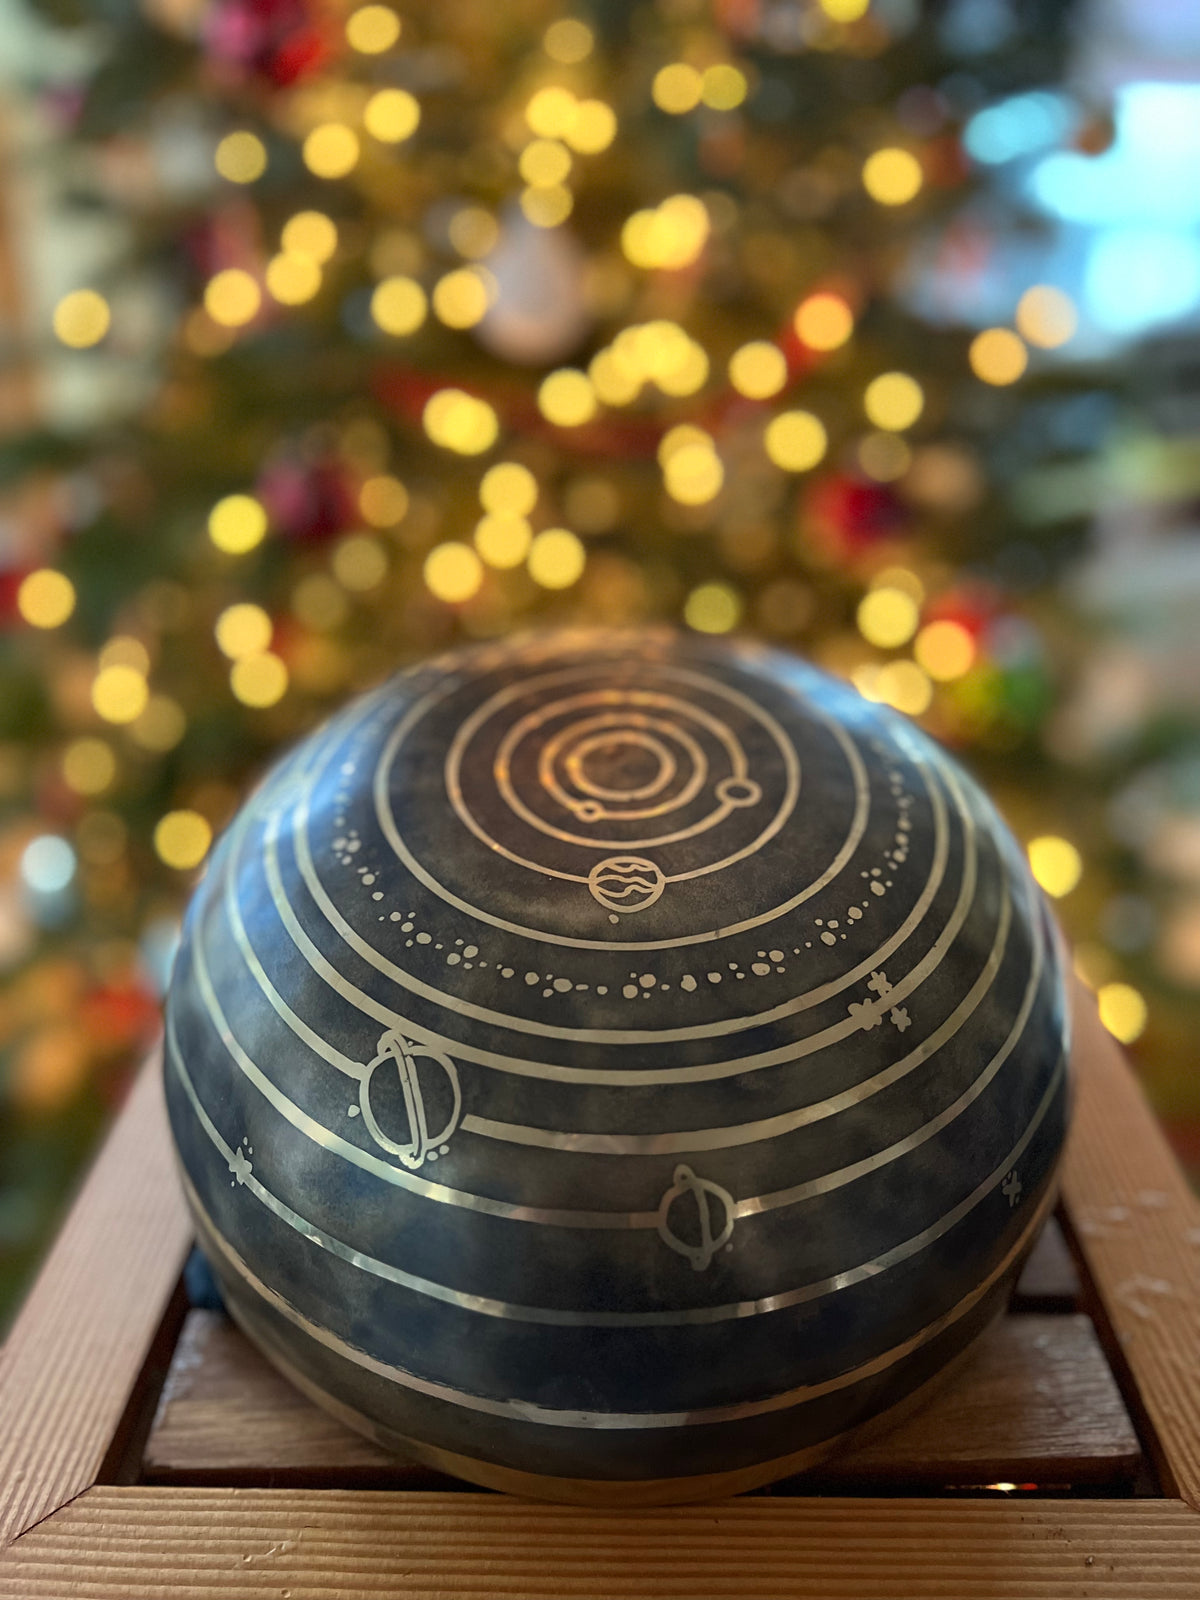 The Planetary Bowl